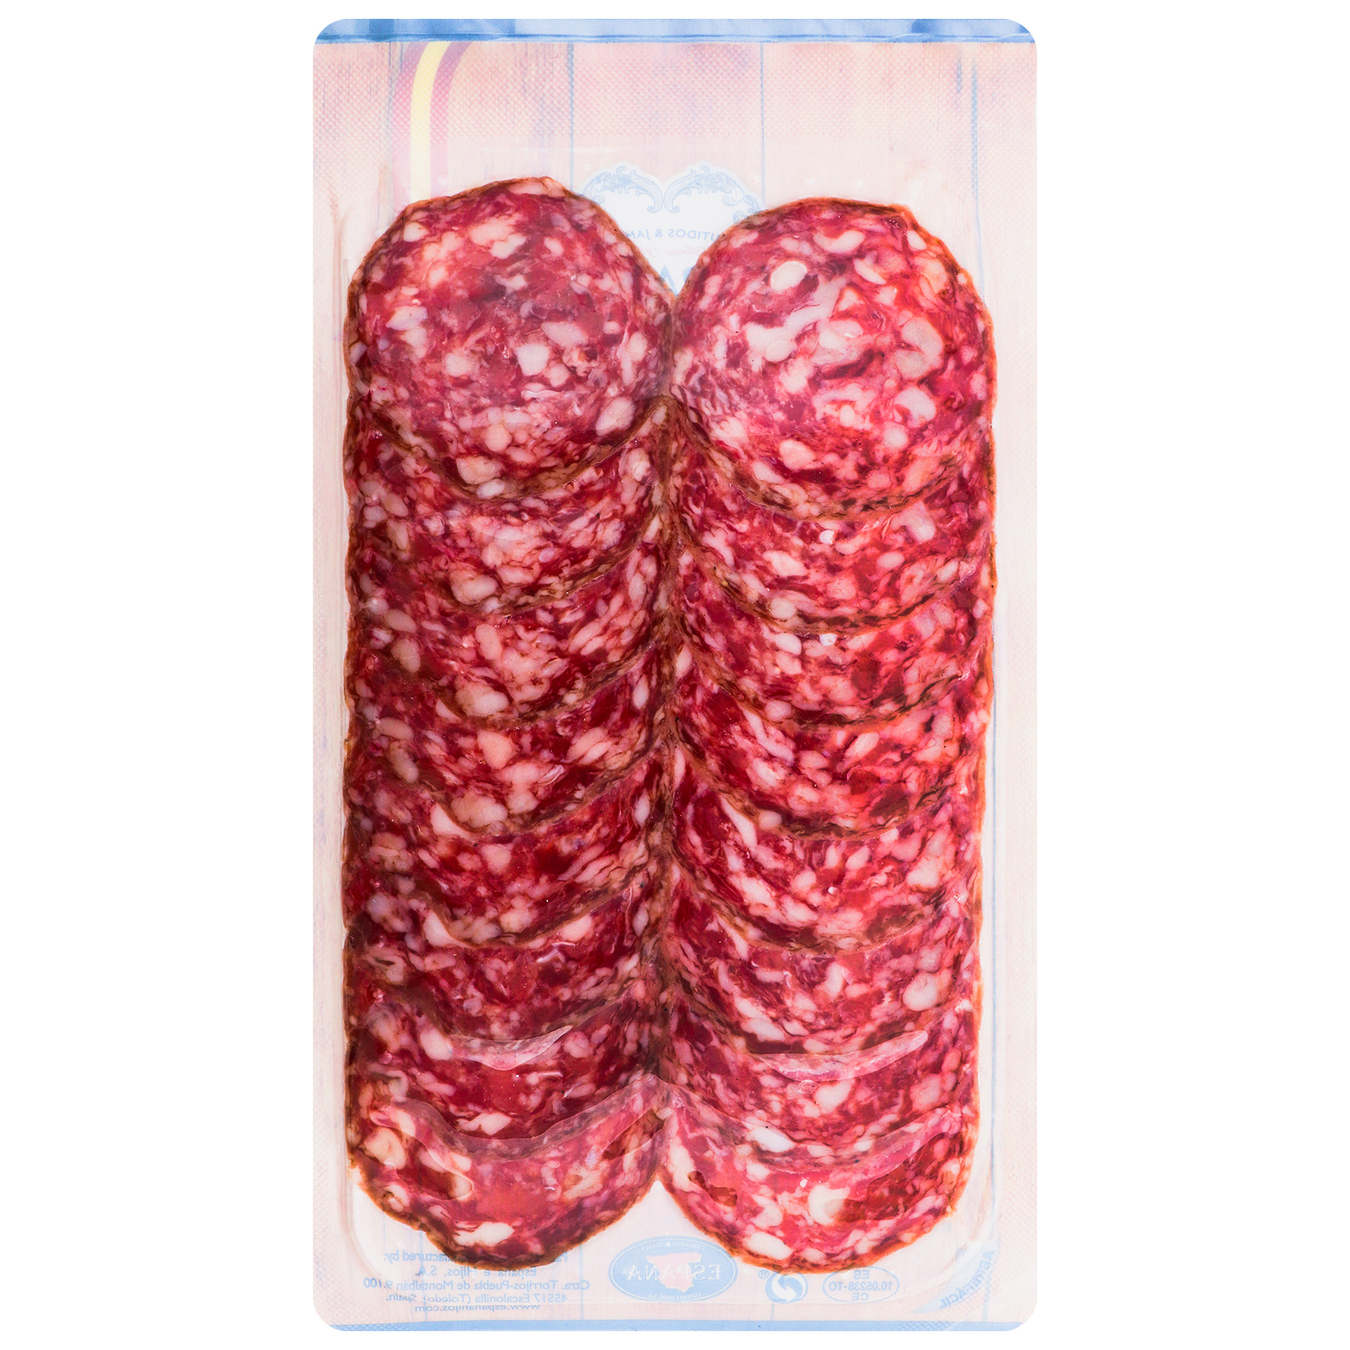 Espana Salchichon Iberico Raw-Cured Sausage 55g 2